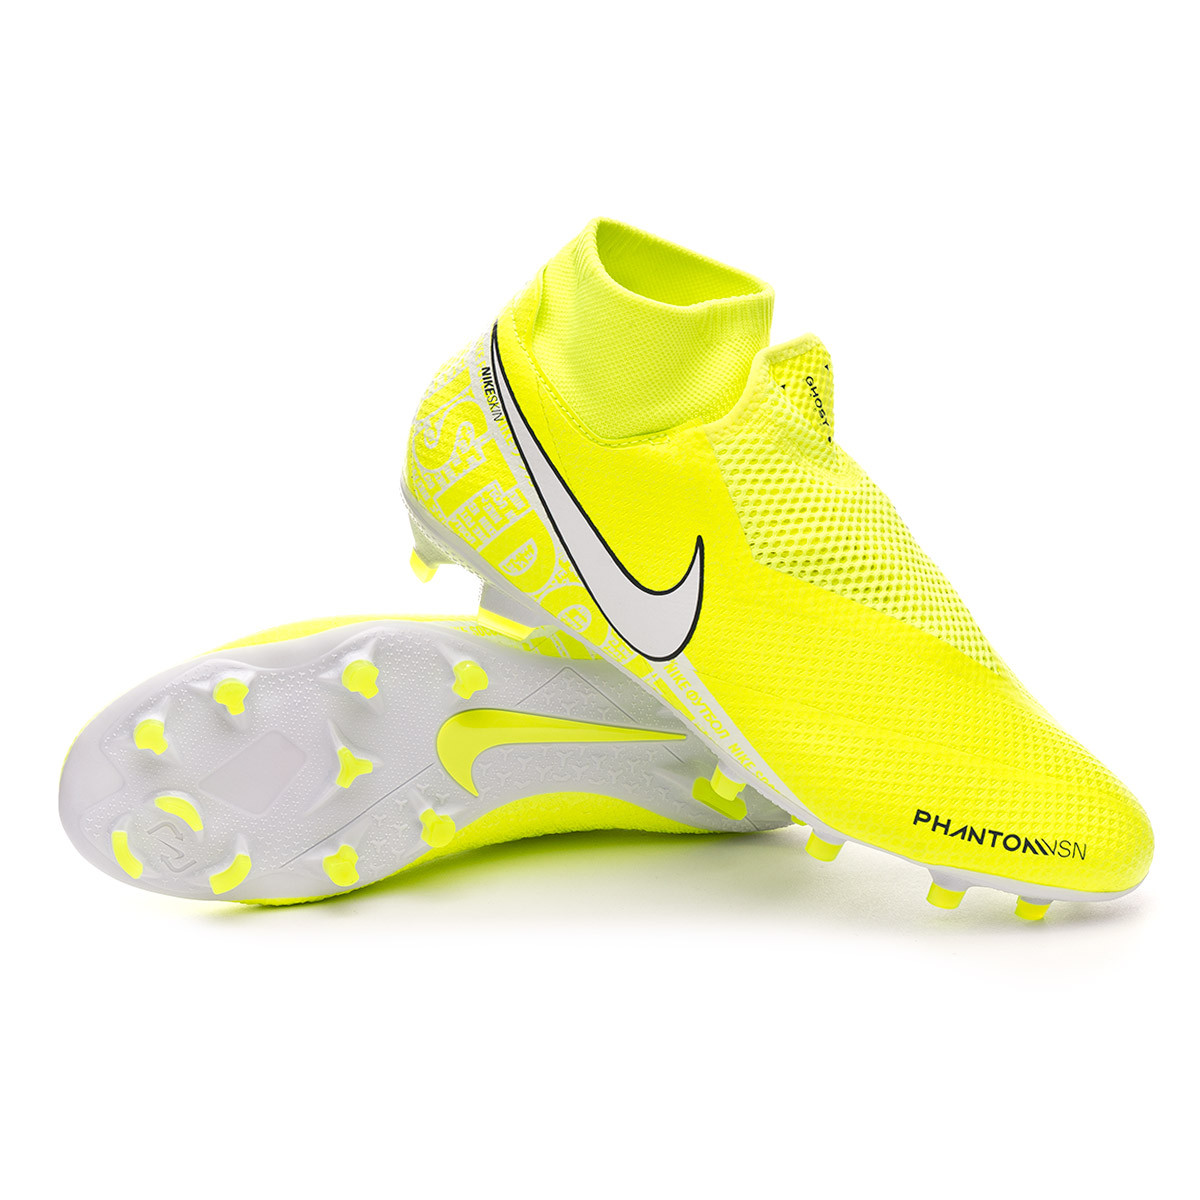 Football Boots Nike Phantom Vision Pro 